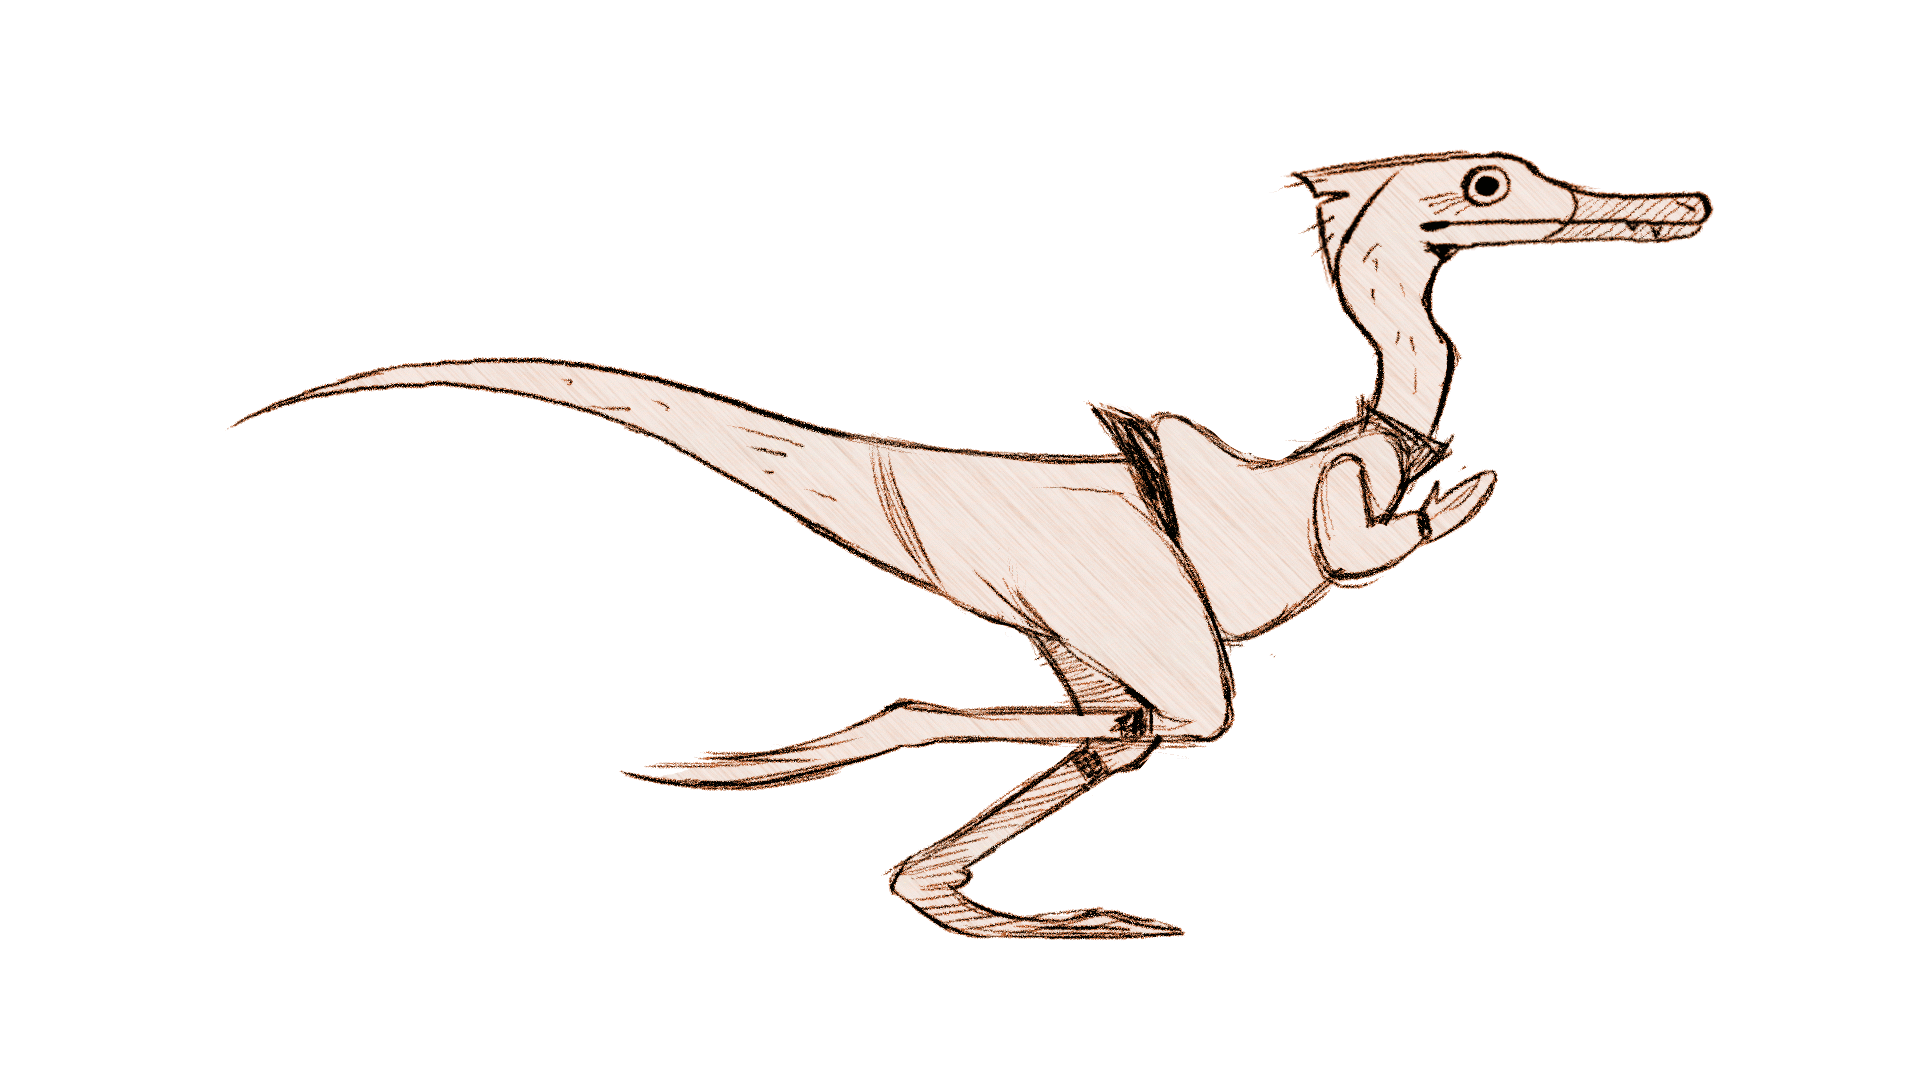 dinosaur run cycle gif - Clip Art Library